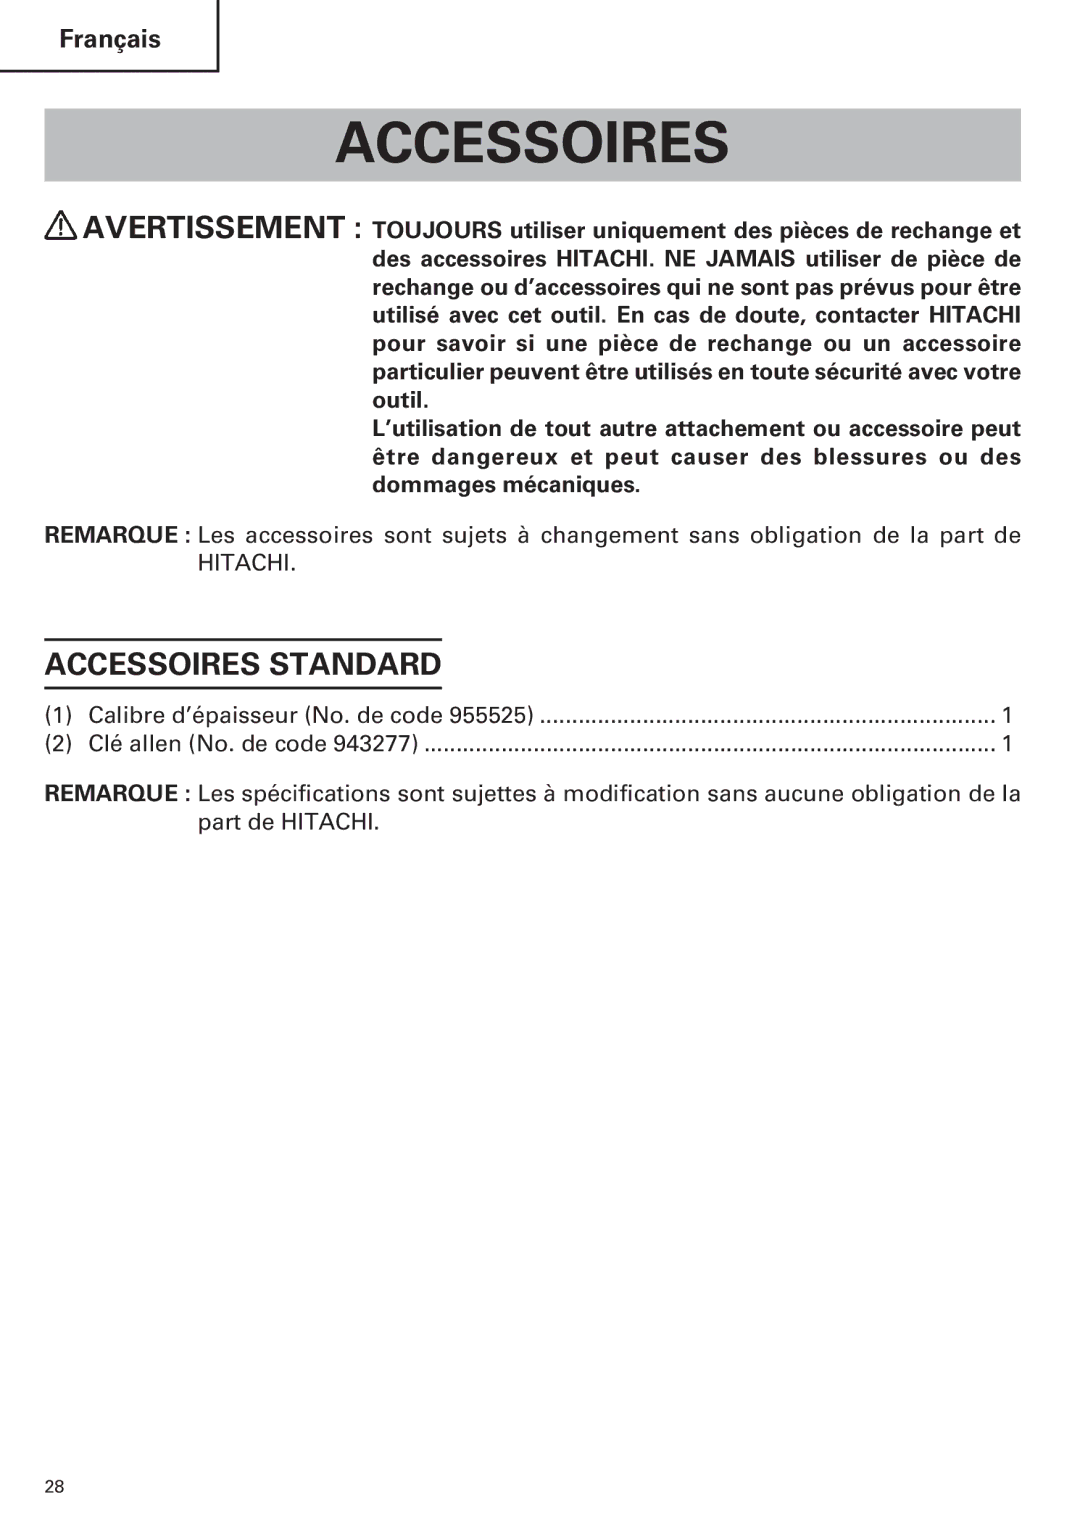 Hitachi CE 16SA instruction manual Accessoires Standard 